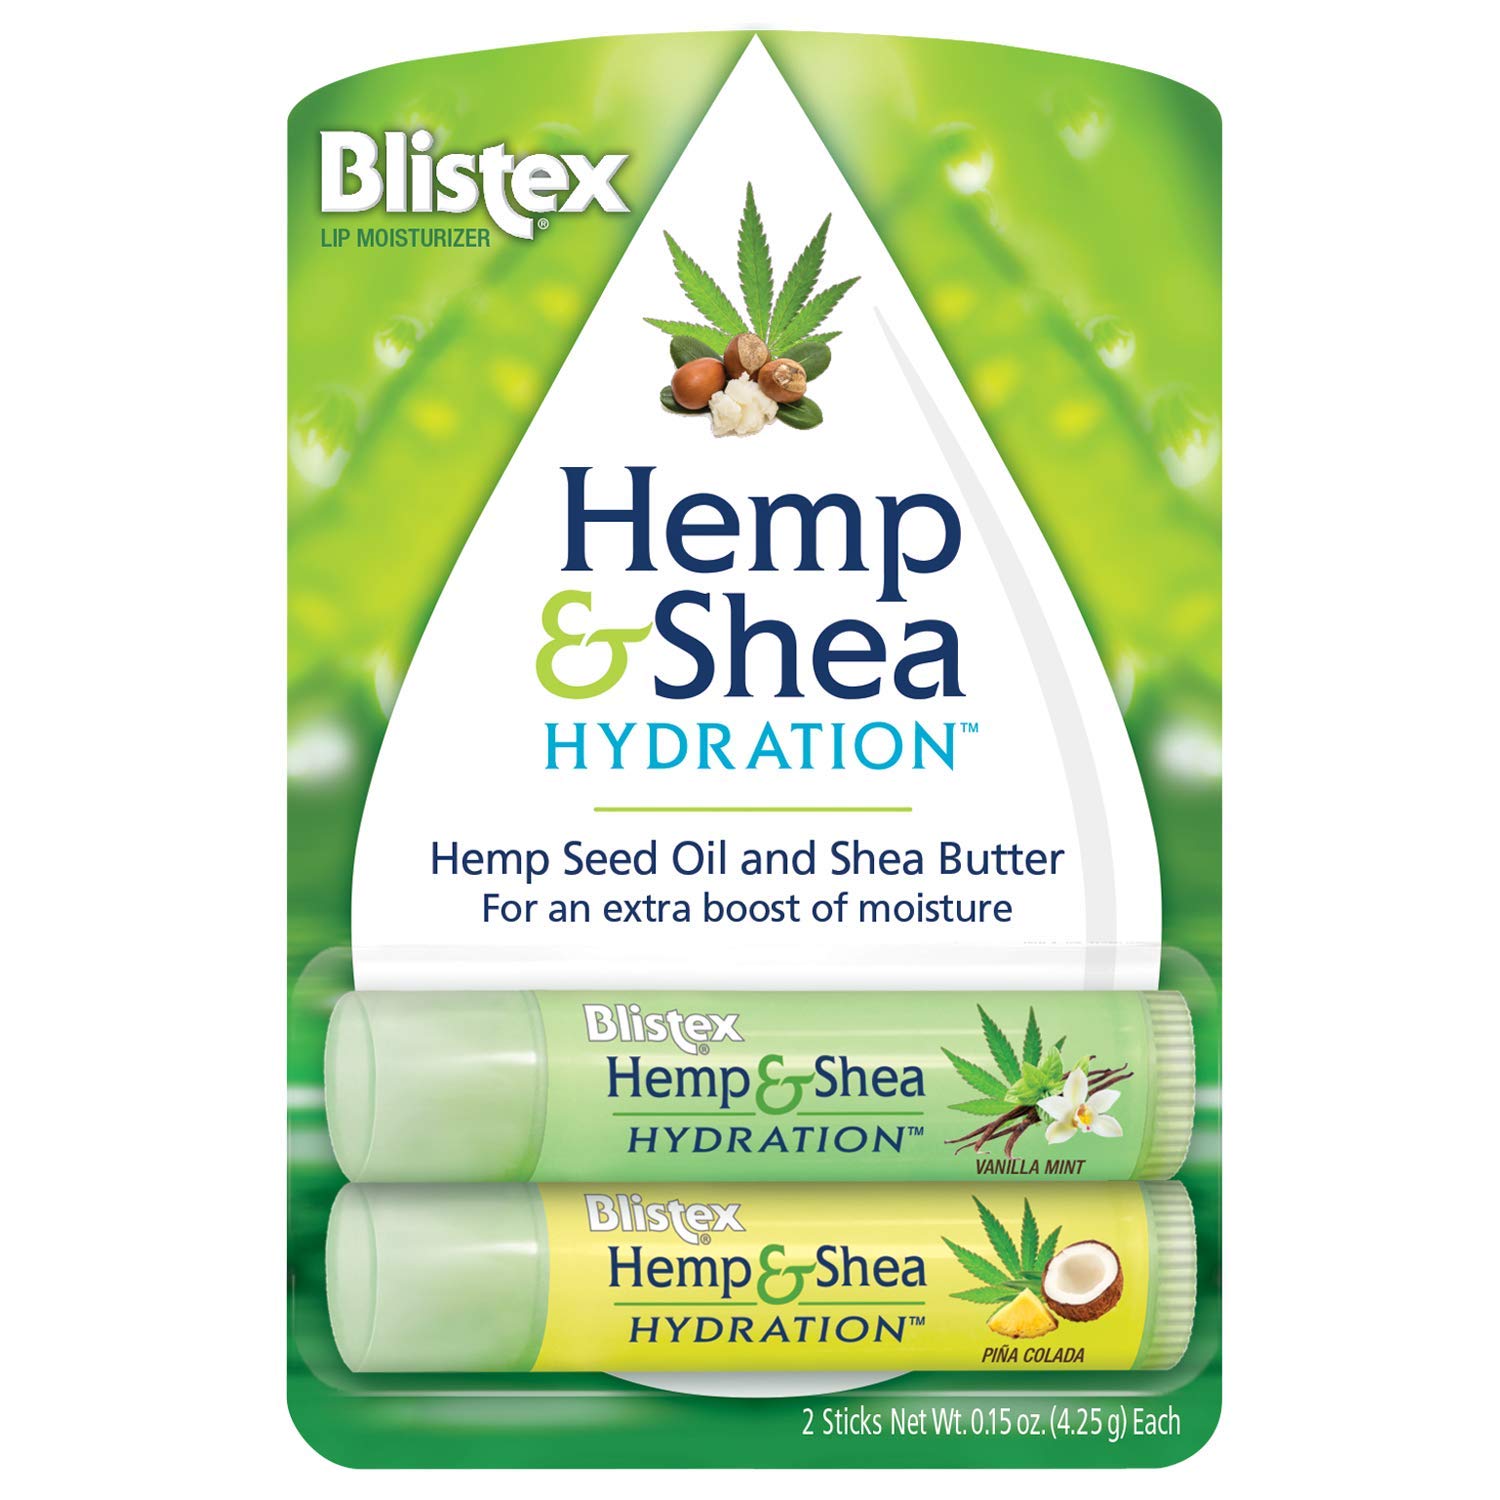 2-Count Blistex Hemp & Shea Hydration Lip Moisturizer Balm (Pina Colada/Vanilla Mint) $1.49 ($0.75 Each) + Free Shipping w/ Prime or on $25+